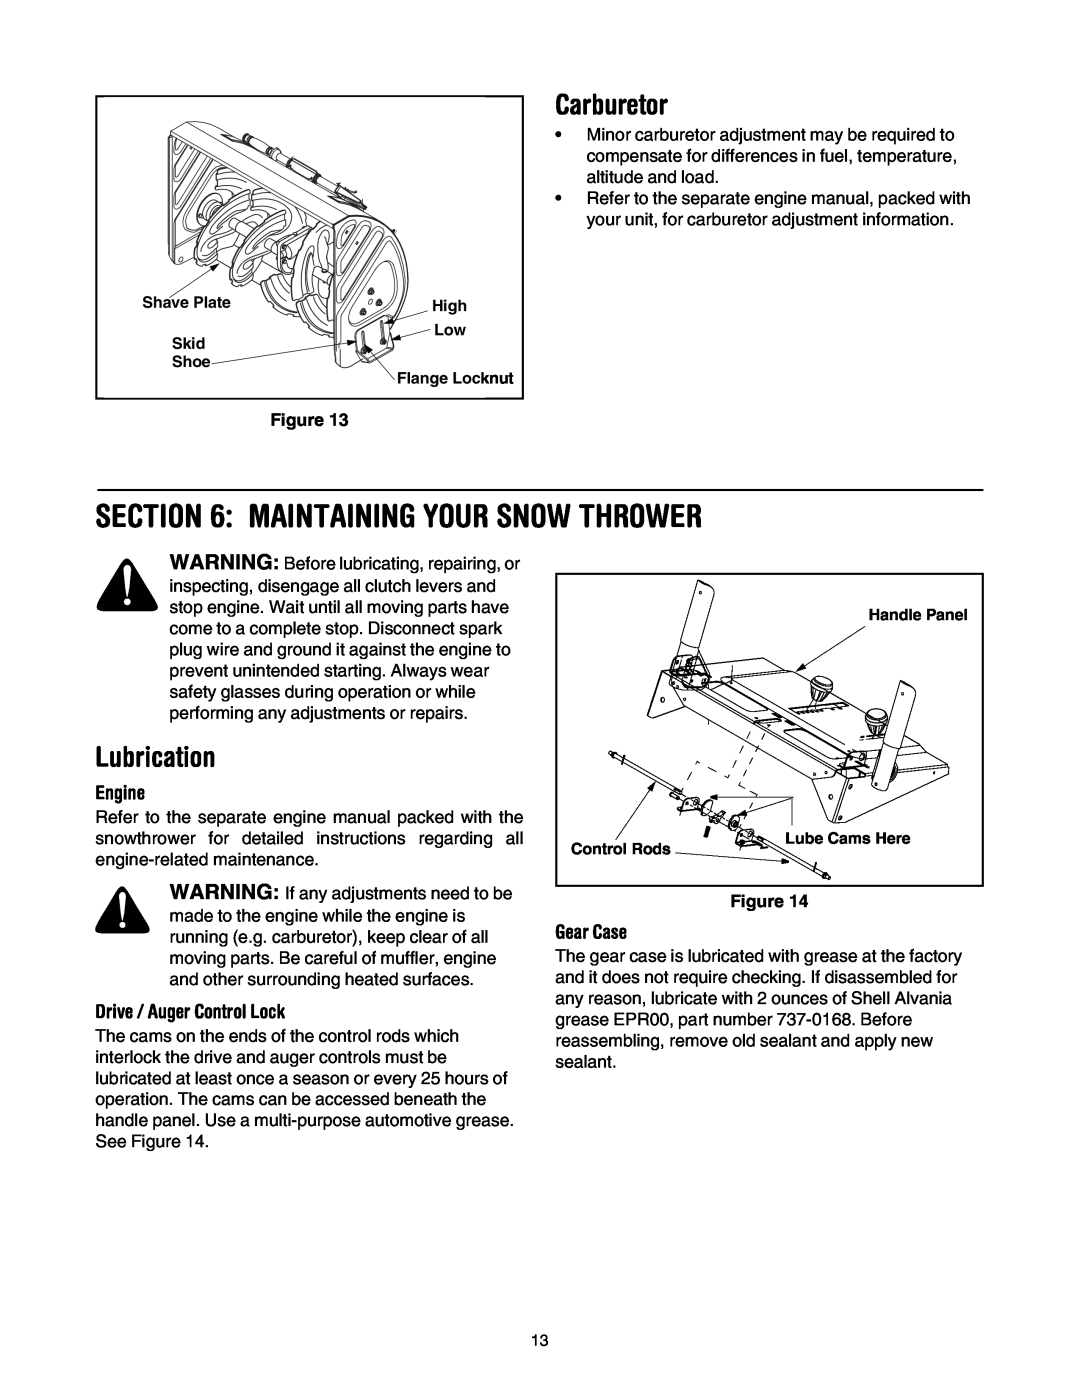 Troy-Bilt OEM-390-679 manual Maintaining Your Snow Thrower, Carburetor, Lubrication, Engine, Drive / Auger Control Lock 